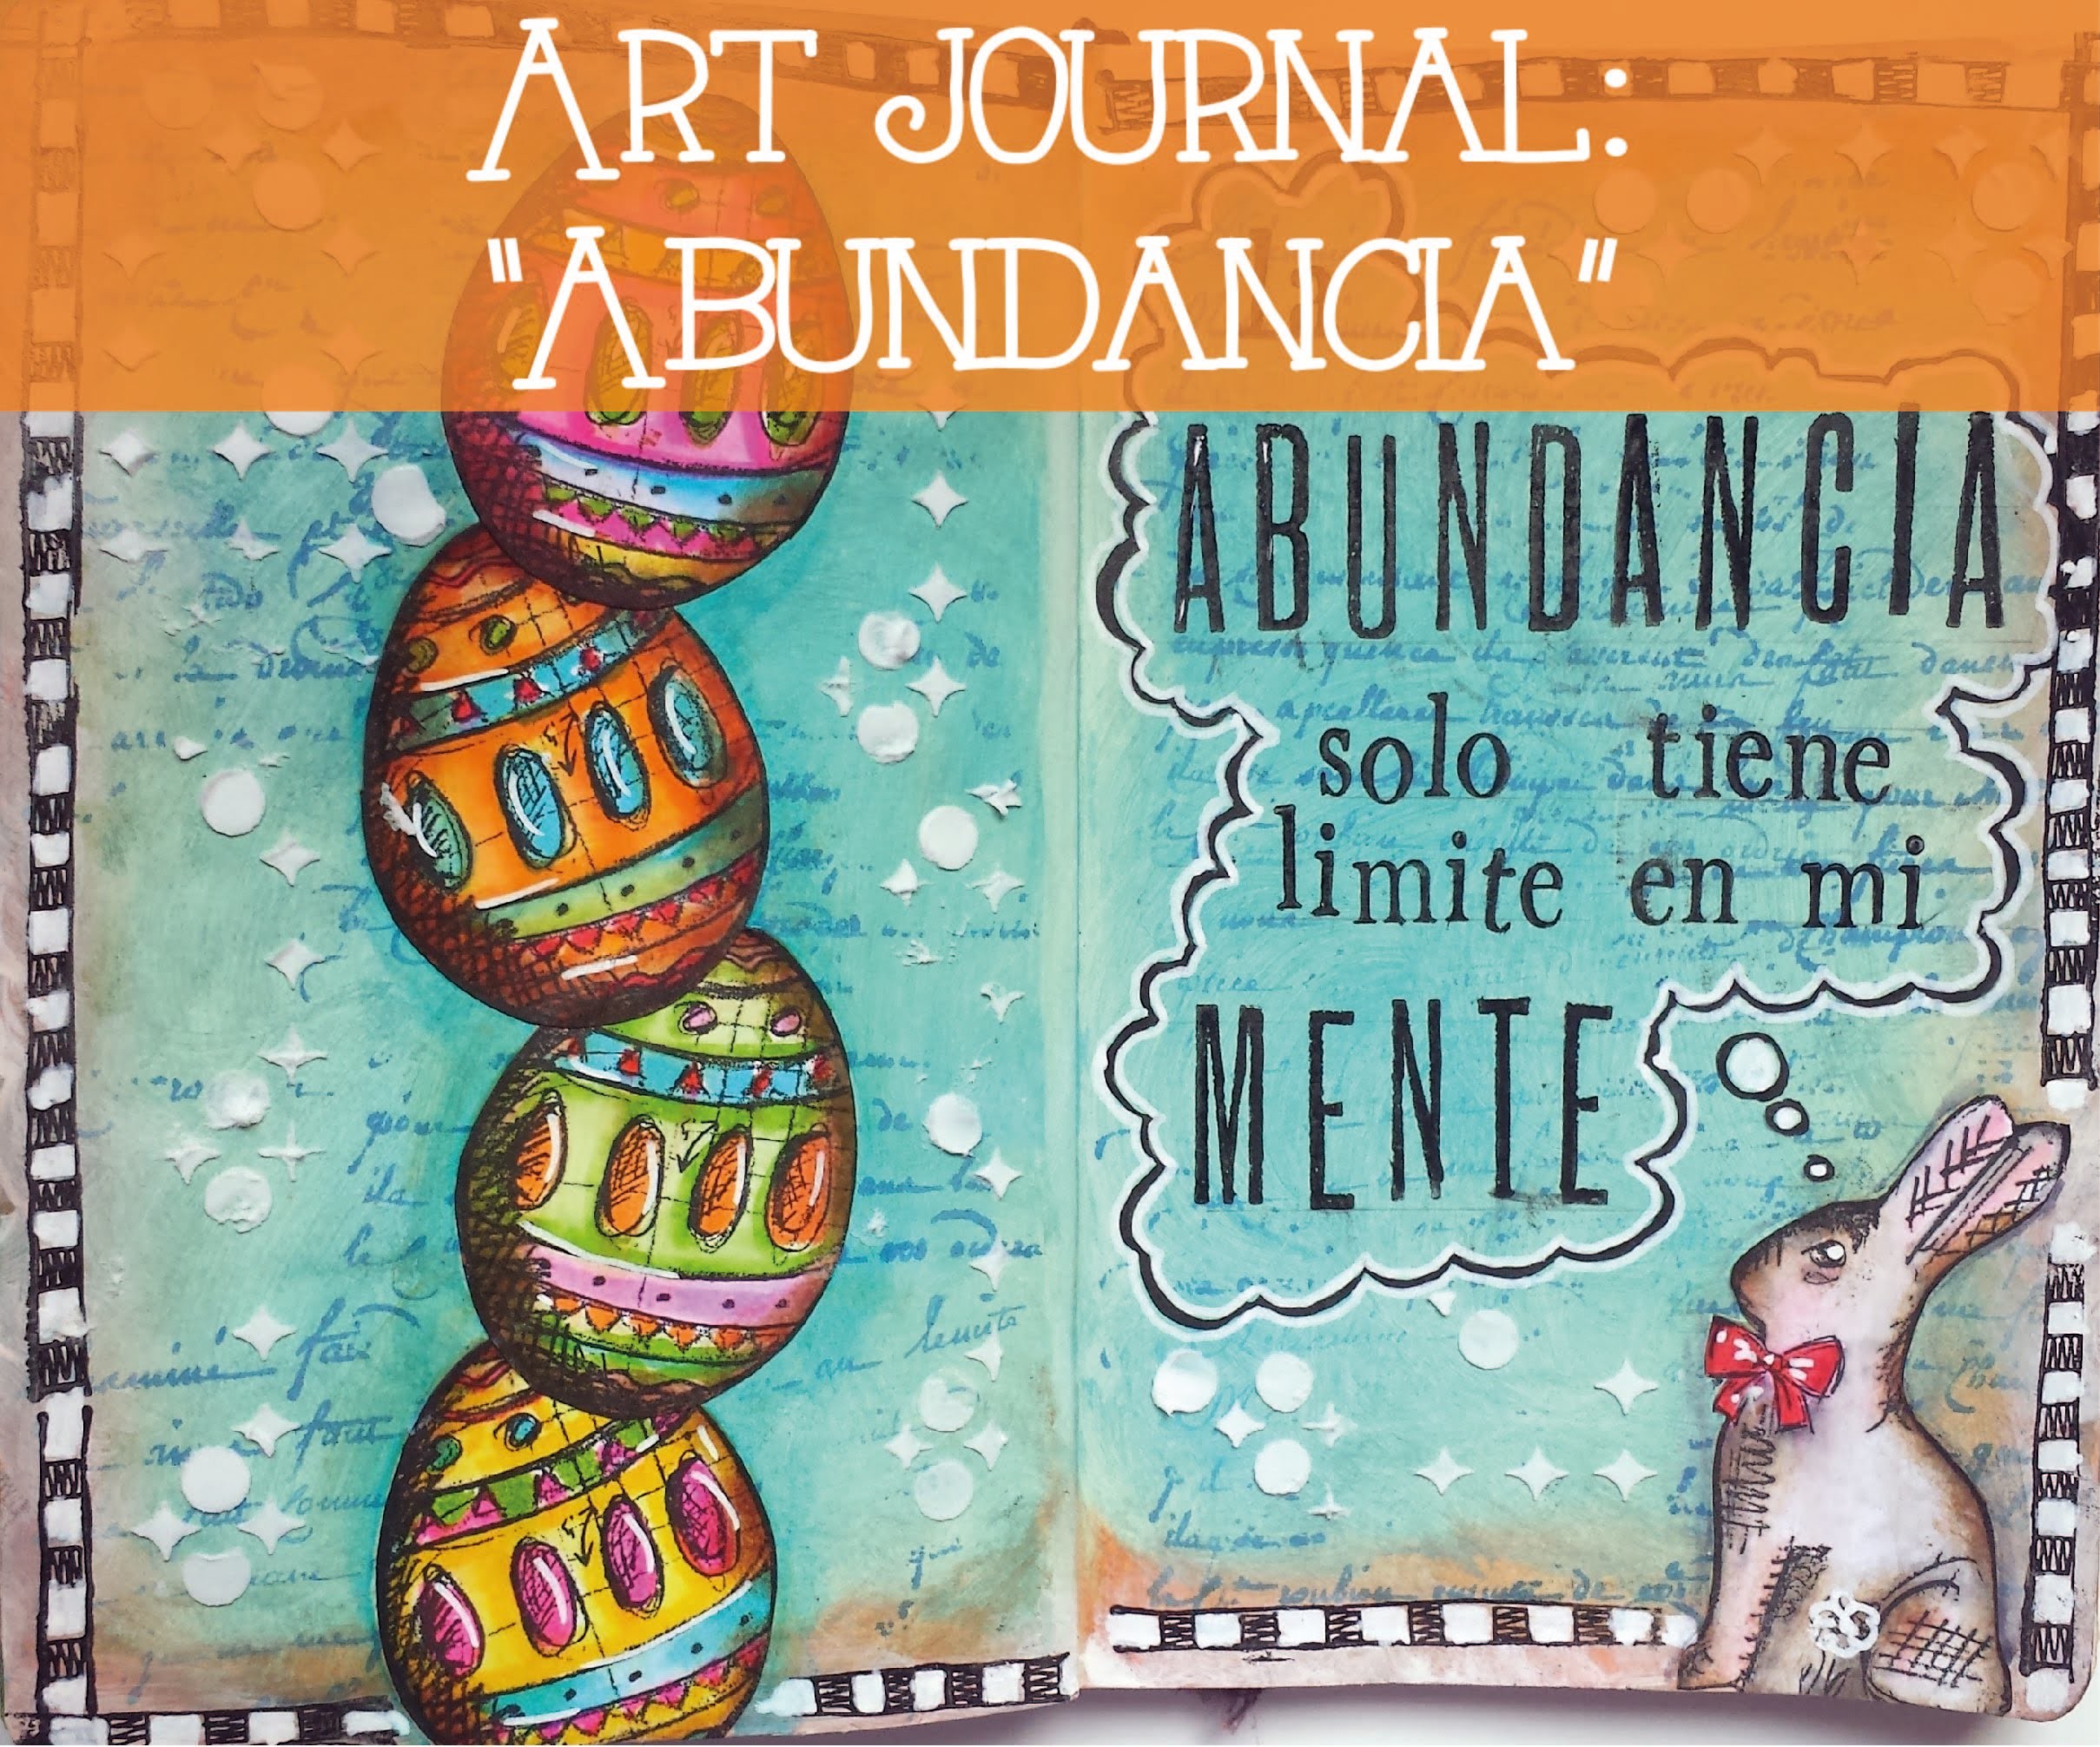 Art Journal:  "Abundancia"